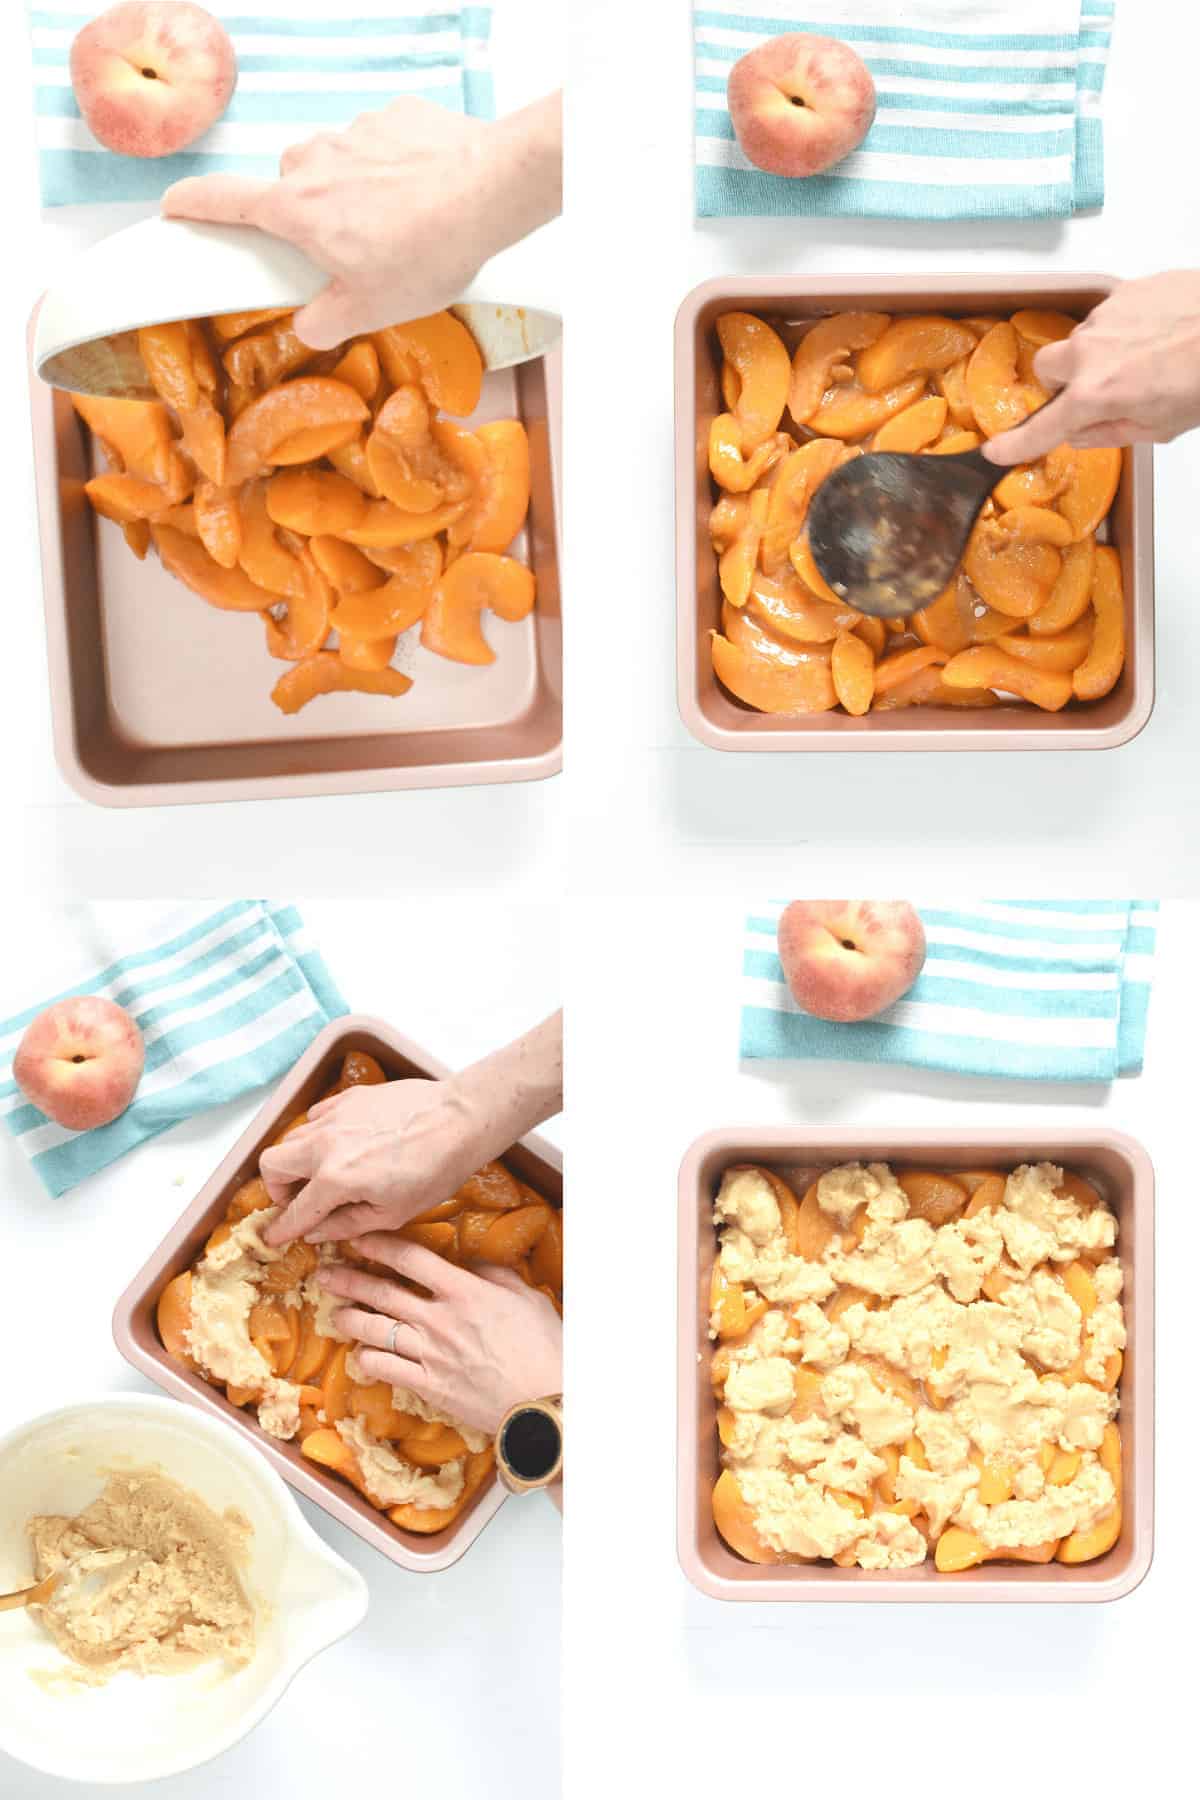 How to make gluten free peach cobbler